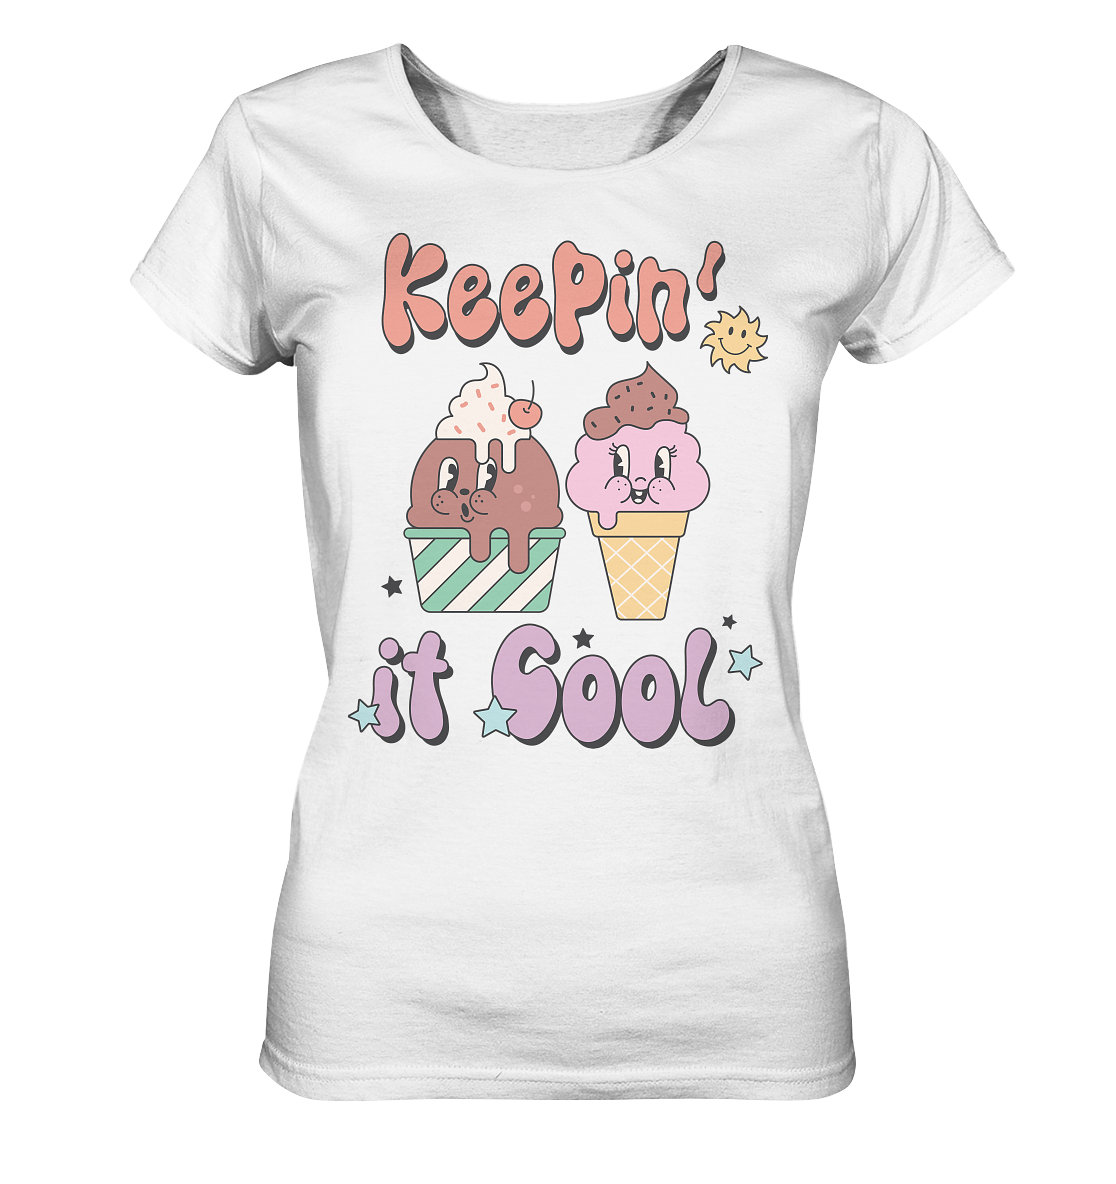 Retro Summer - Ceepin it cool - Ladies Organic Shirt